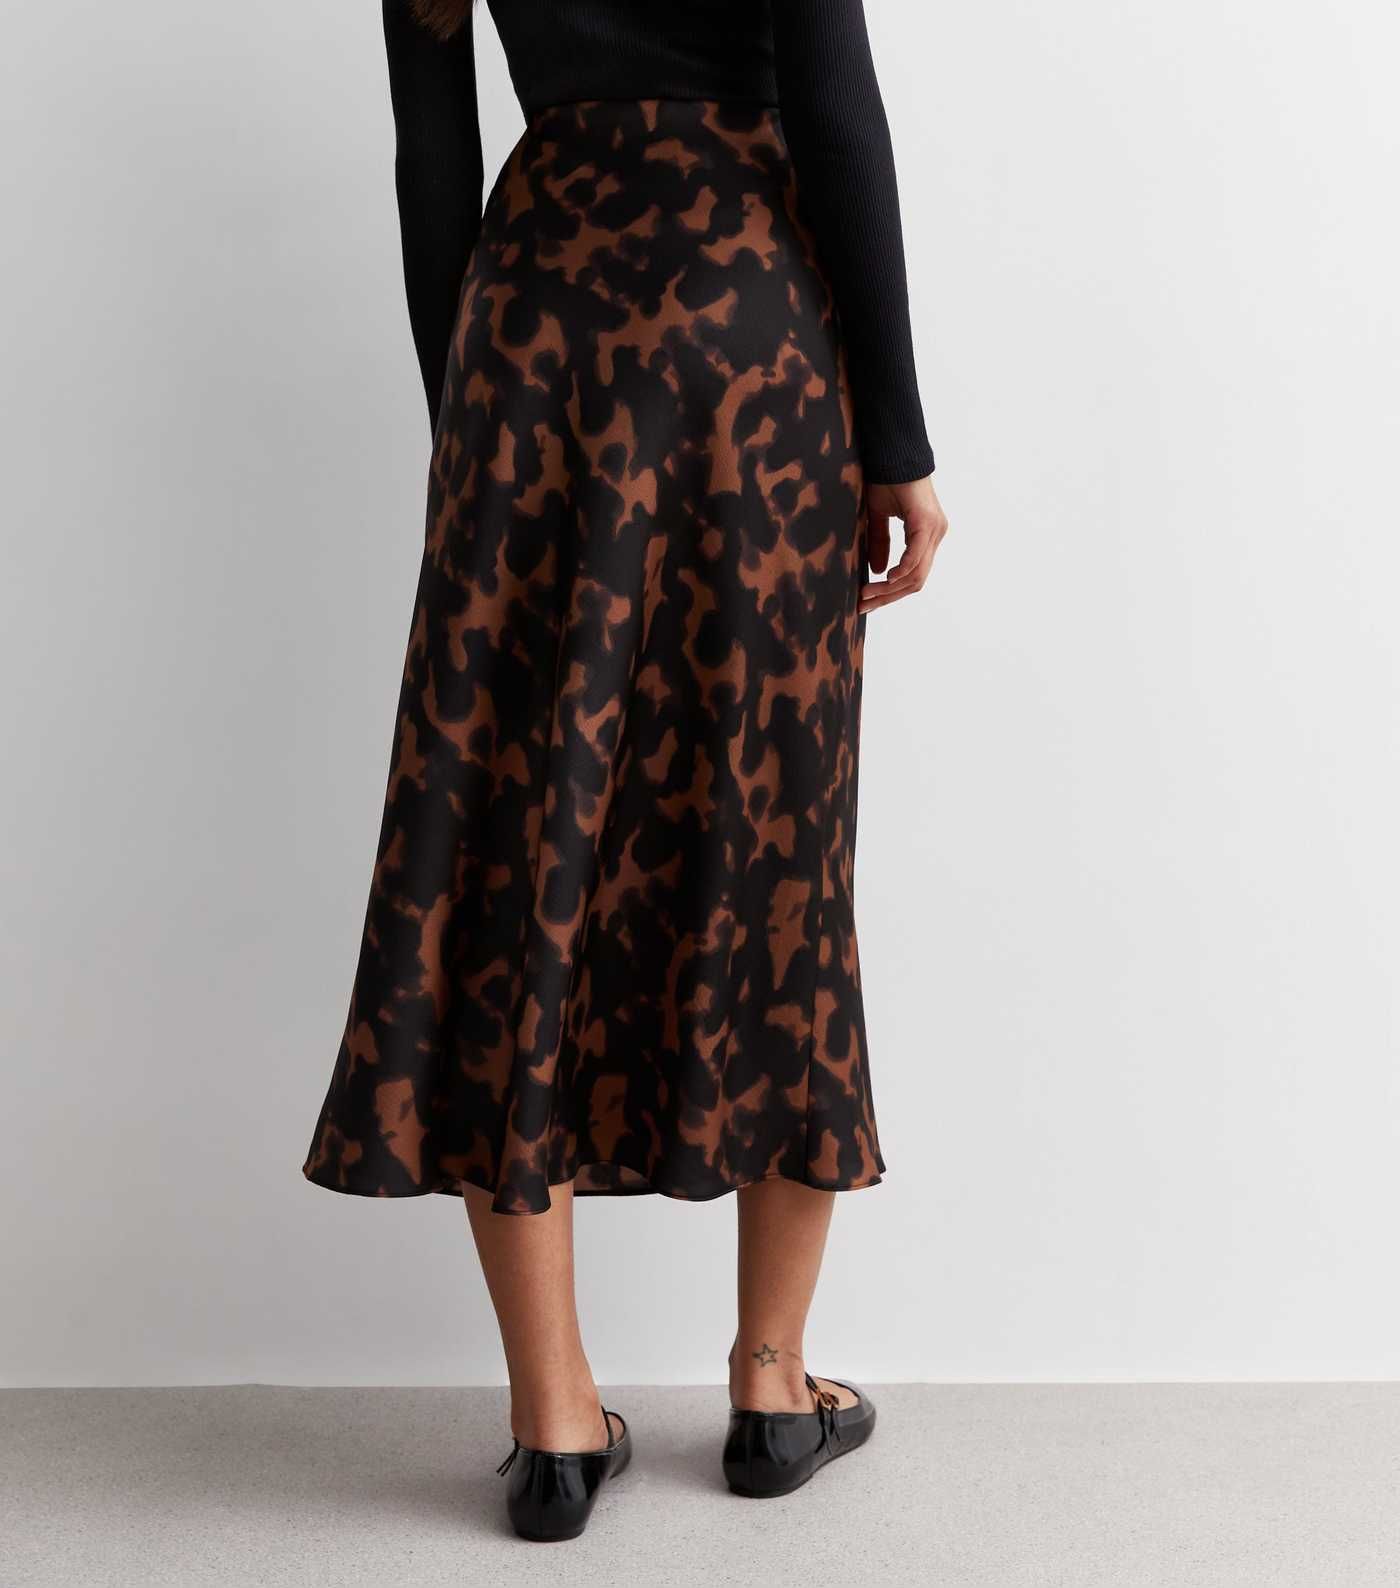 Brown Tortoiseshell Print Satin Bias Cut Midaxi Skirt
						
						Add to Saved Items
						Remov... | New Look (UK)